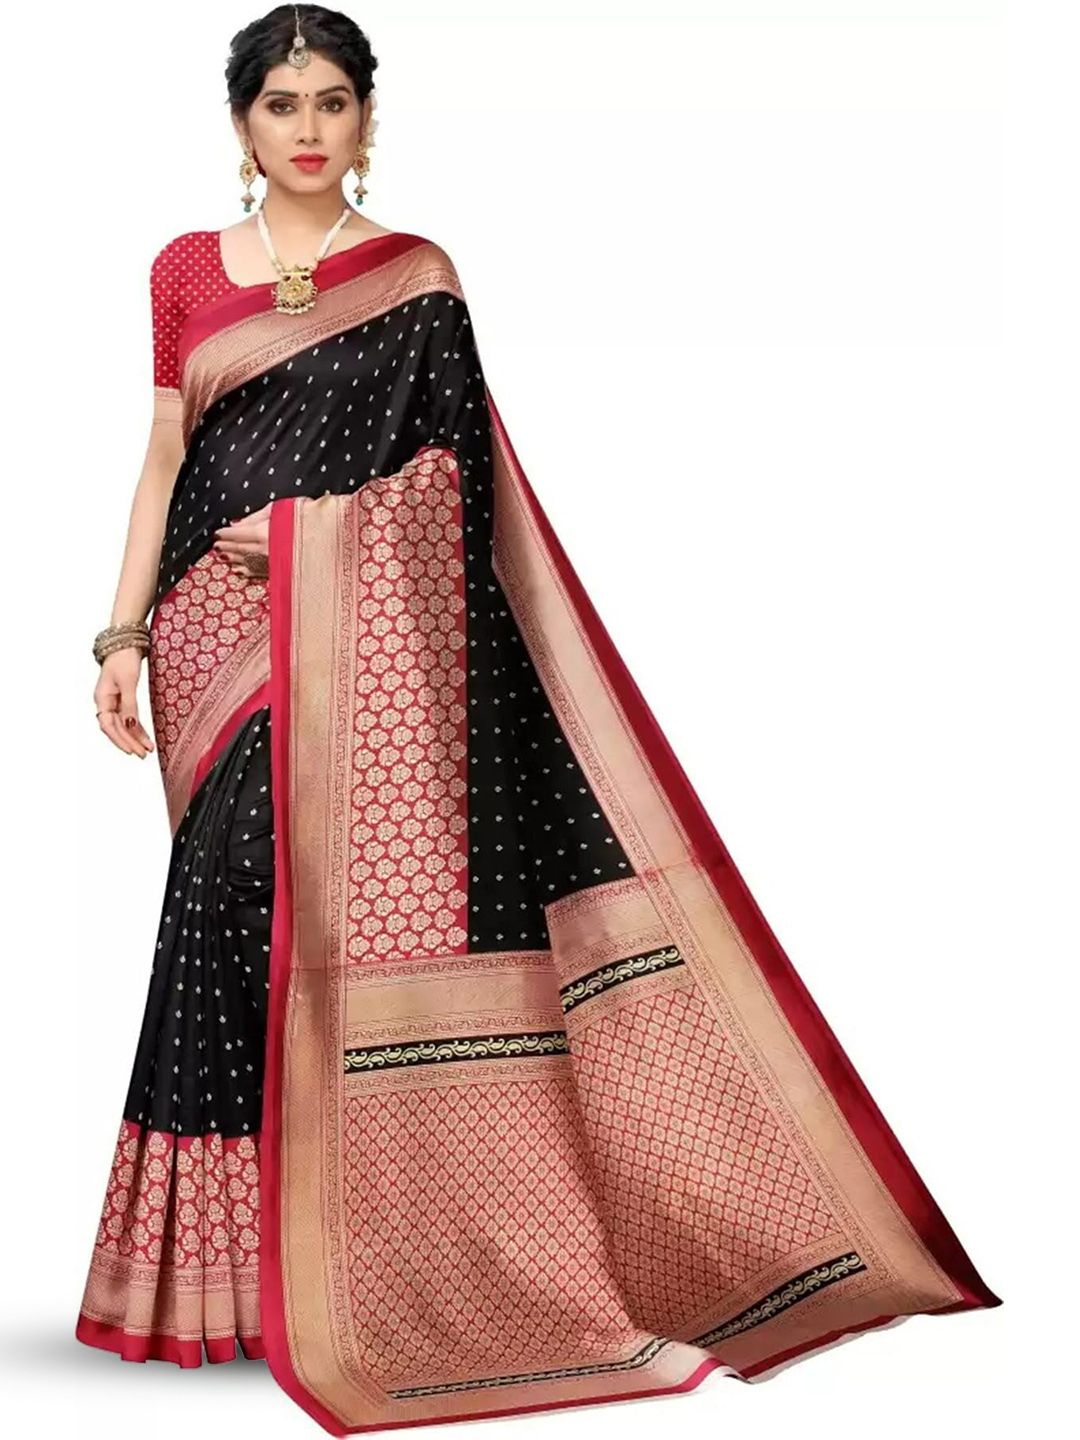 KALINI Woven Design Banarasi Saree Price in India